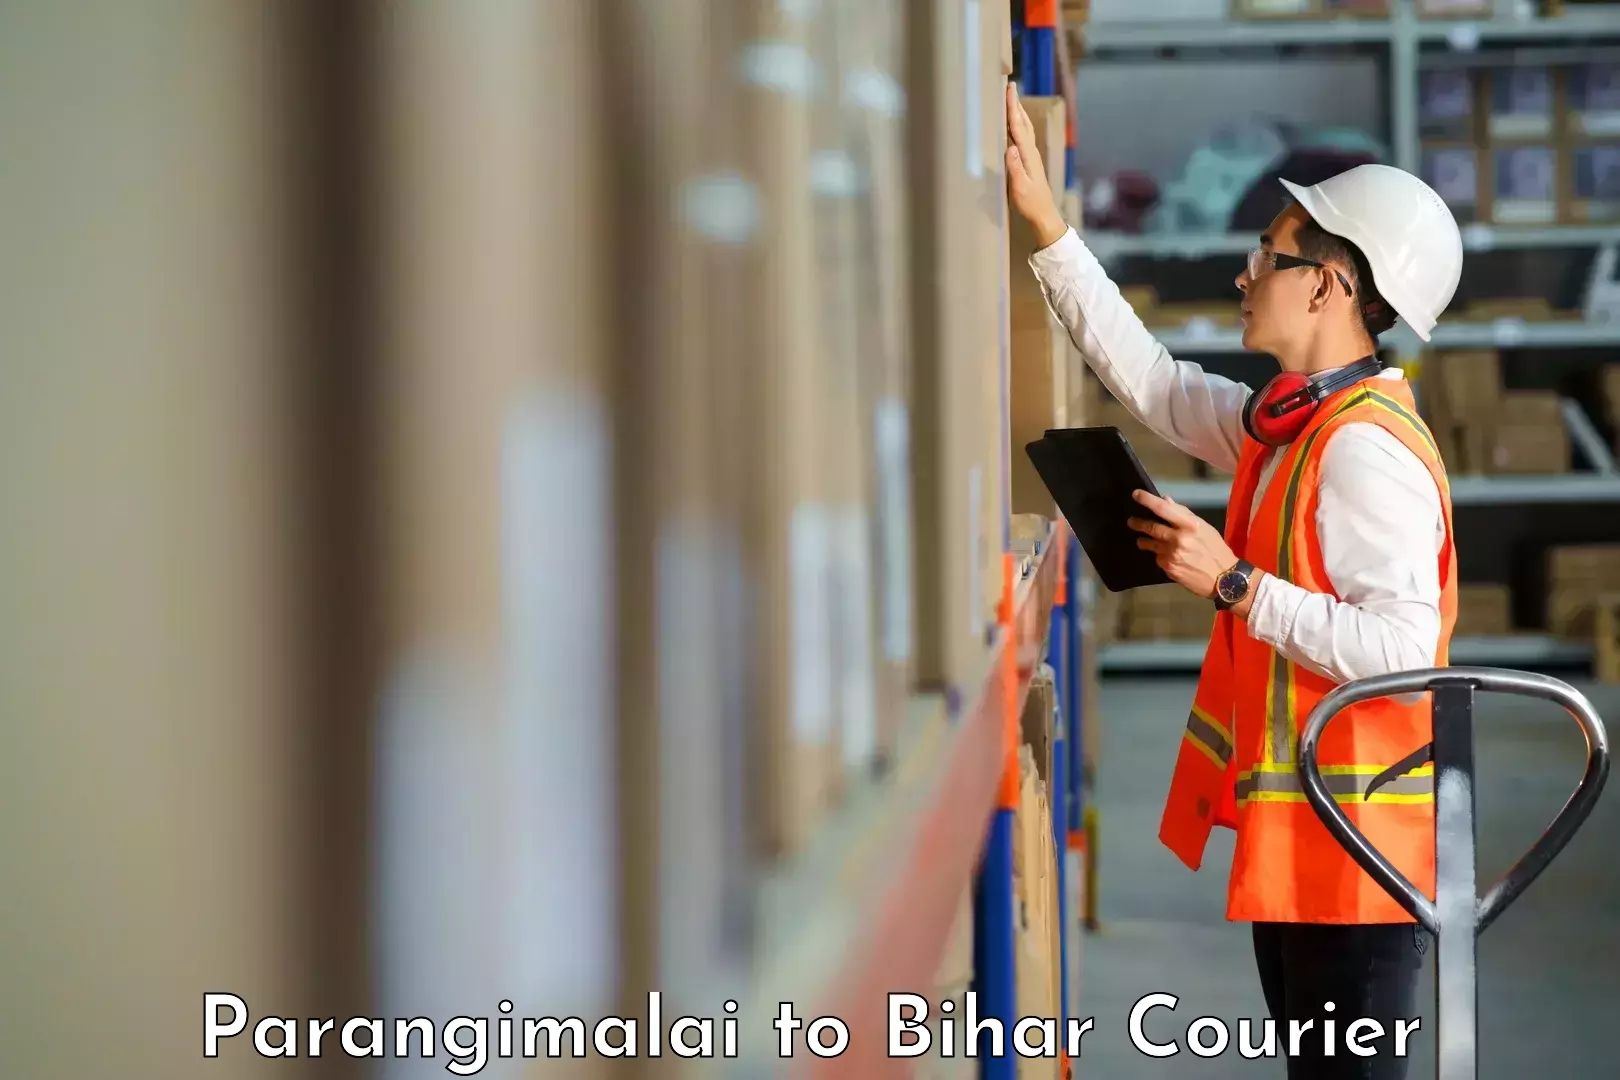 Personalized courier experiences Parangimalai to Bihta